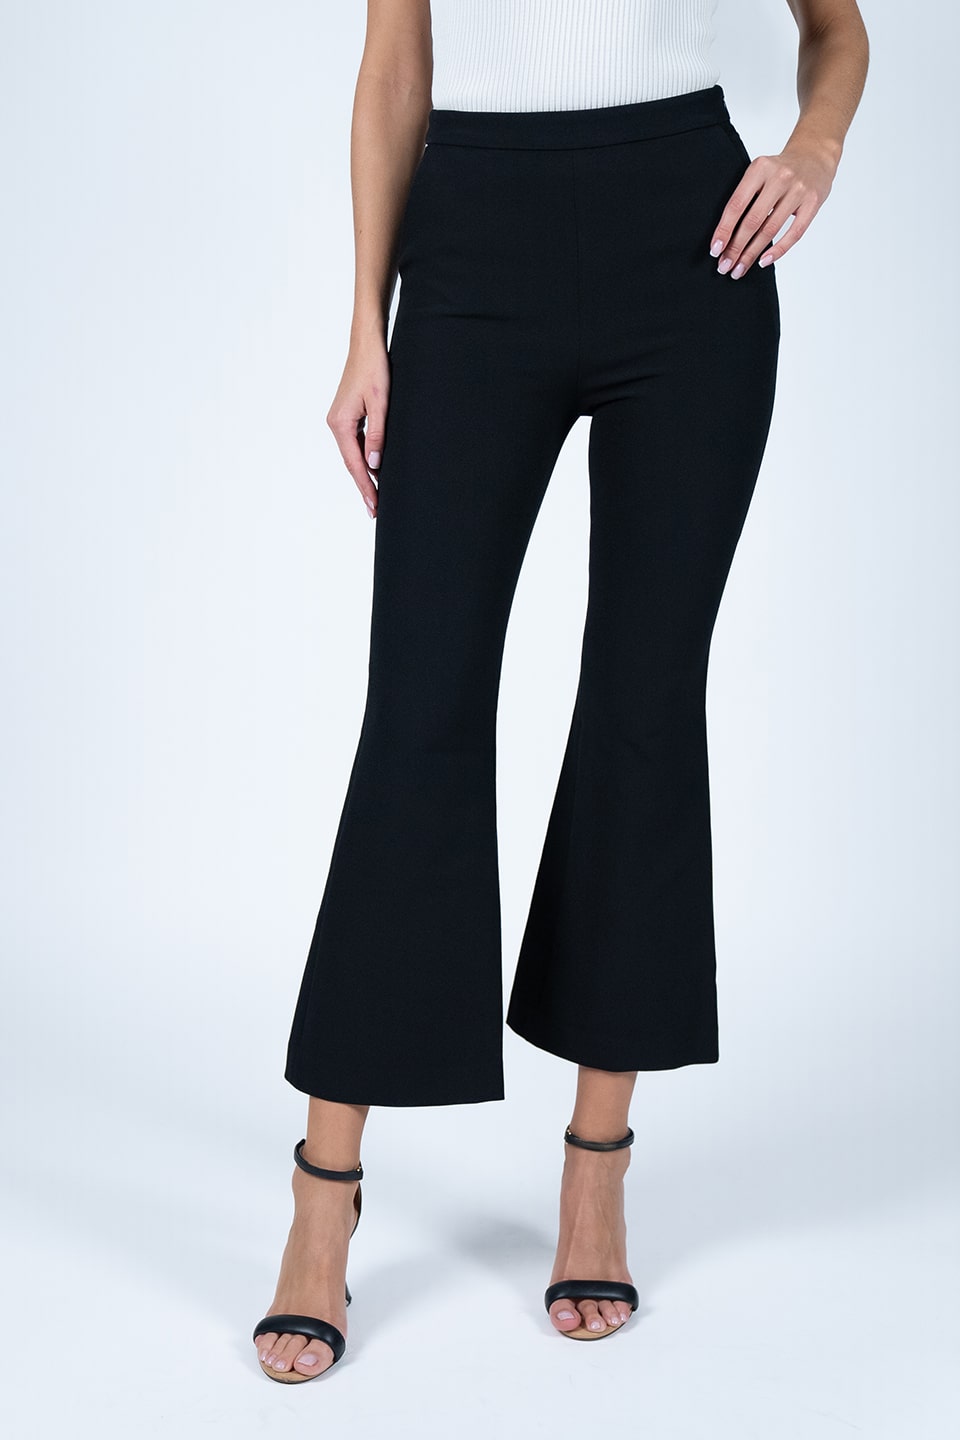 Shop online trendy Black Women pants from Vivetta Fashion designer. Product gallery 1